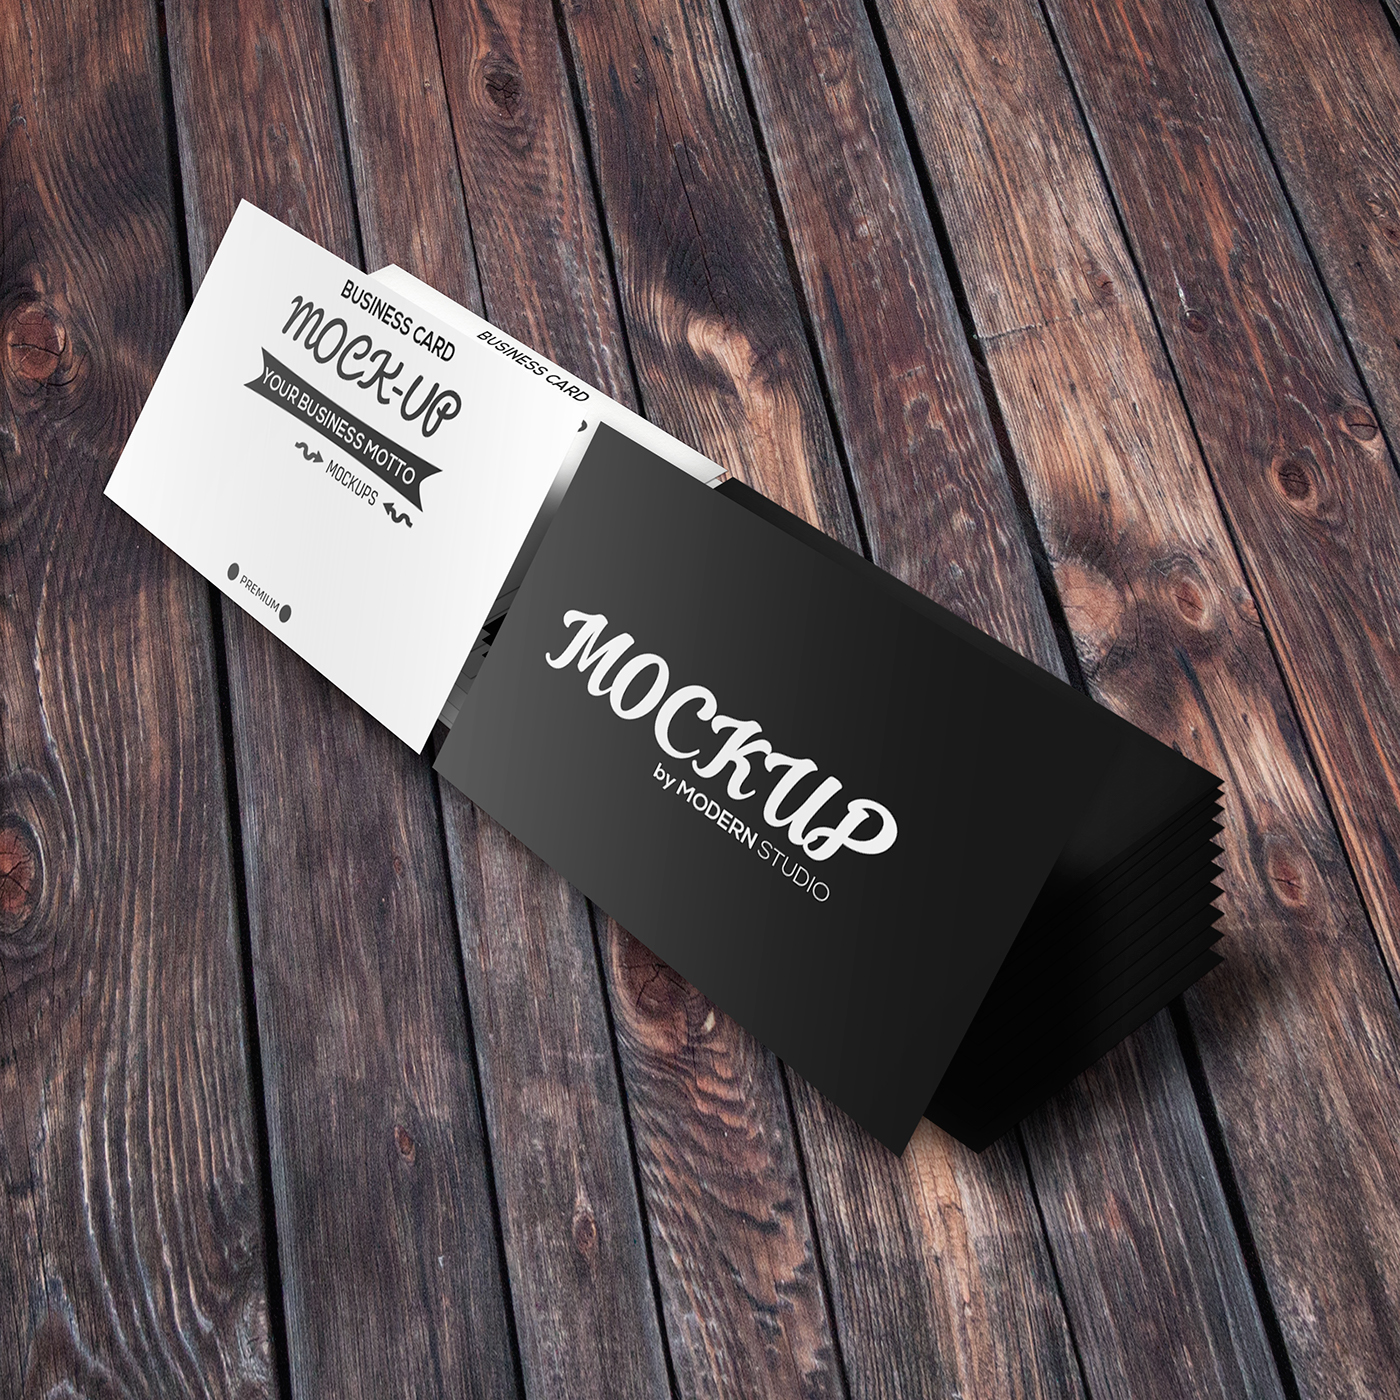 Mockup psd mockups realistic business card card black Smart object photoshop Illustrator mehran shahid. Chowdhury